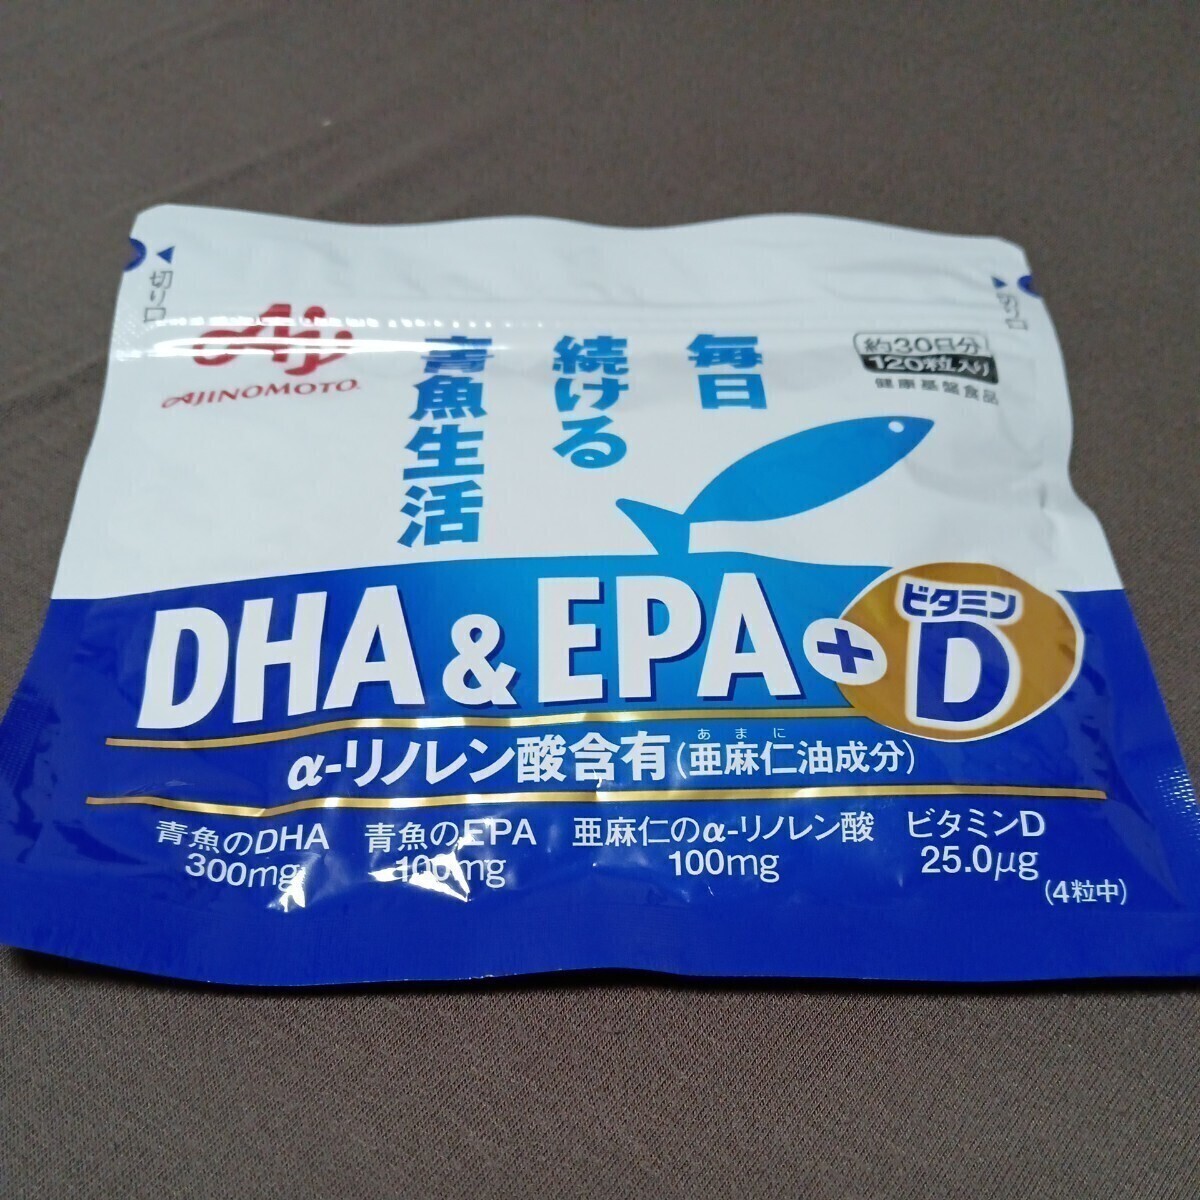  Ajinomoto DHA&EPA vitamin D 120 bead entering best-before date 2026 year 2 month 